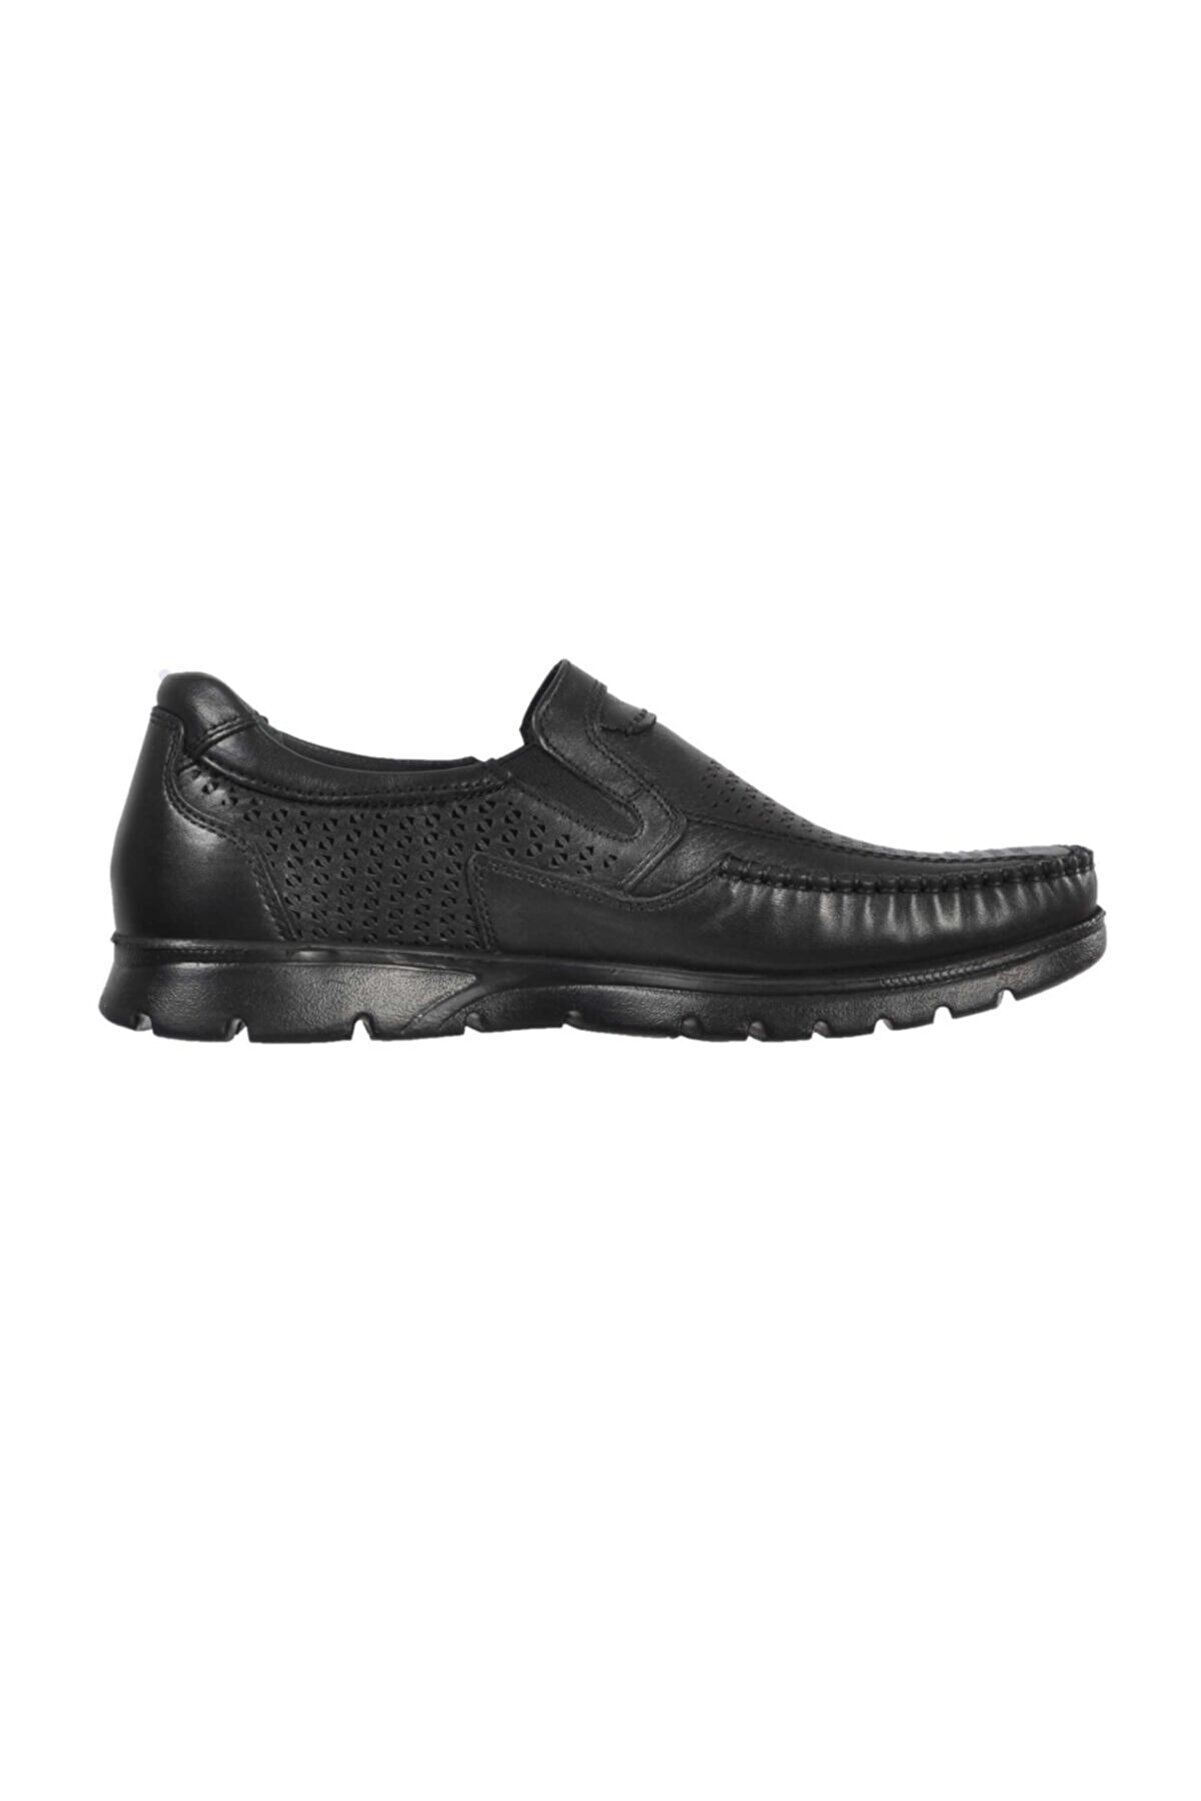 Forelli 32618-h Comfort Erkek Ayakkabı Siyah